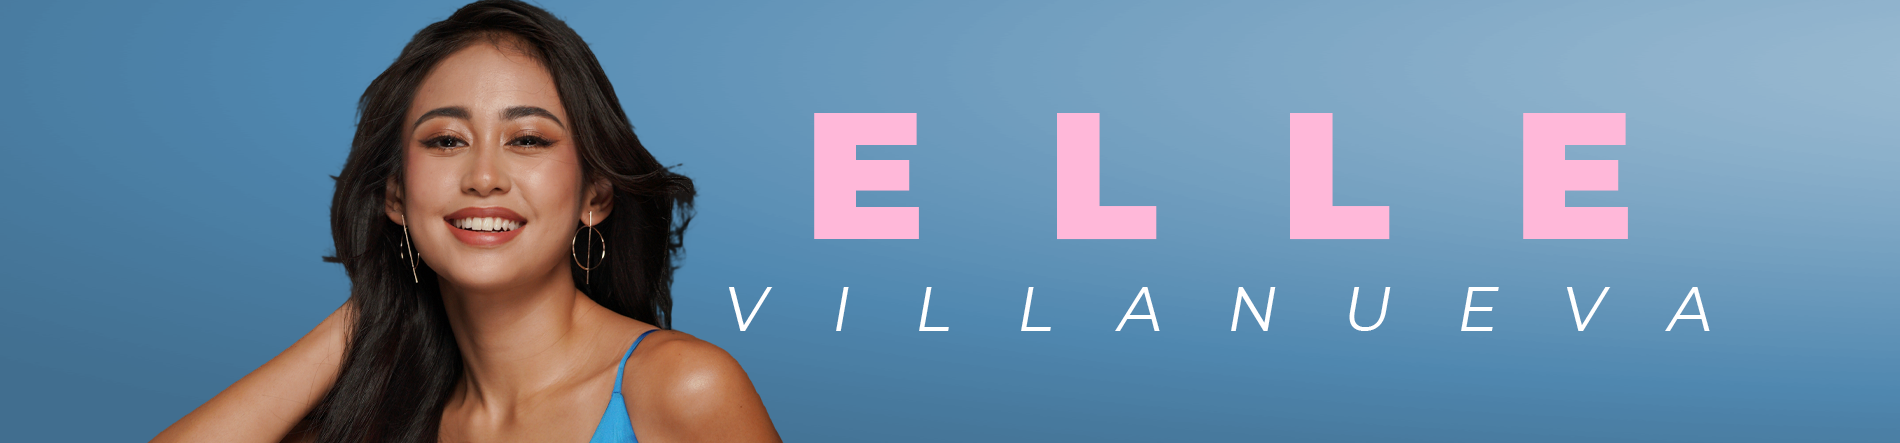 Elle Villanueva Desktop Banner